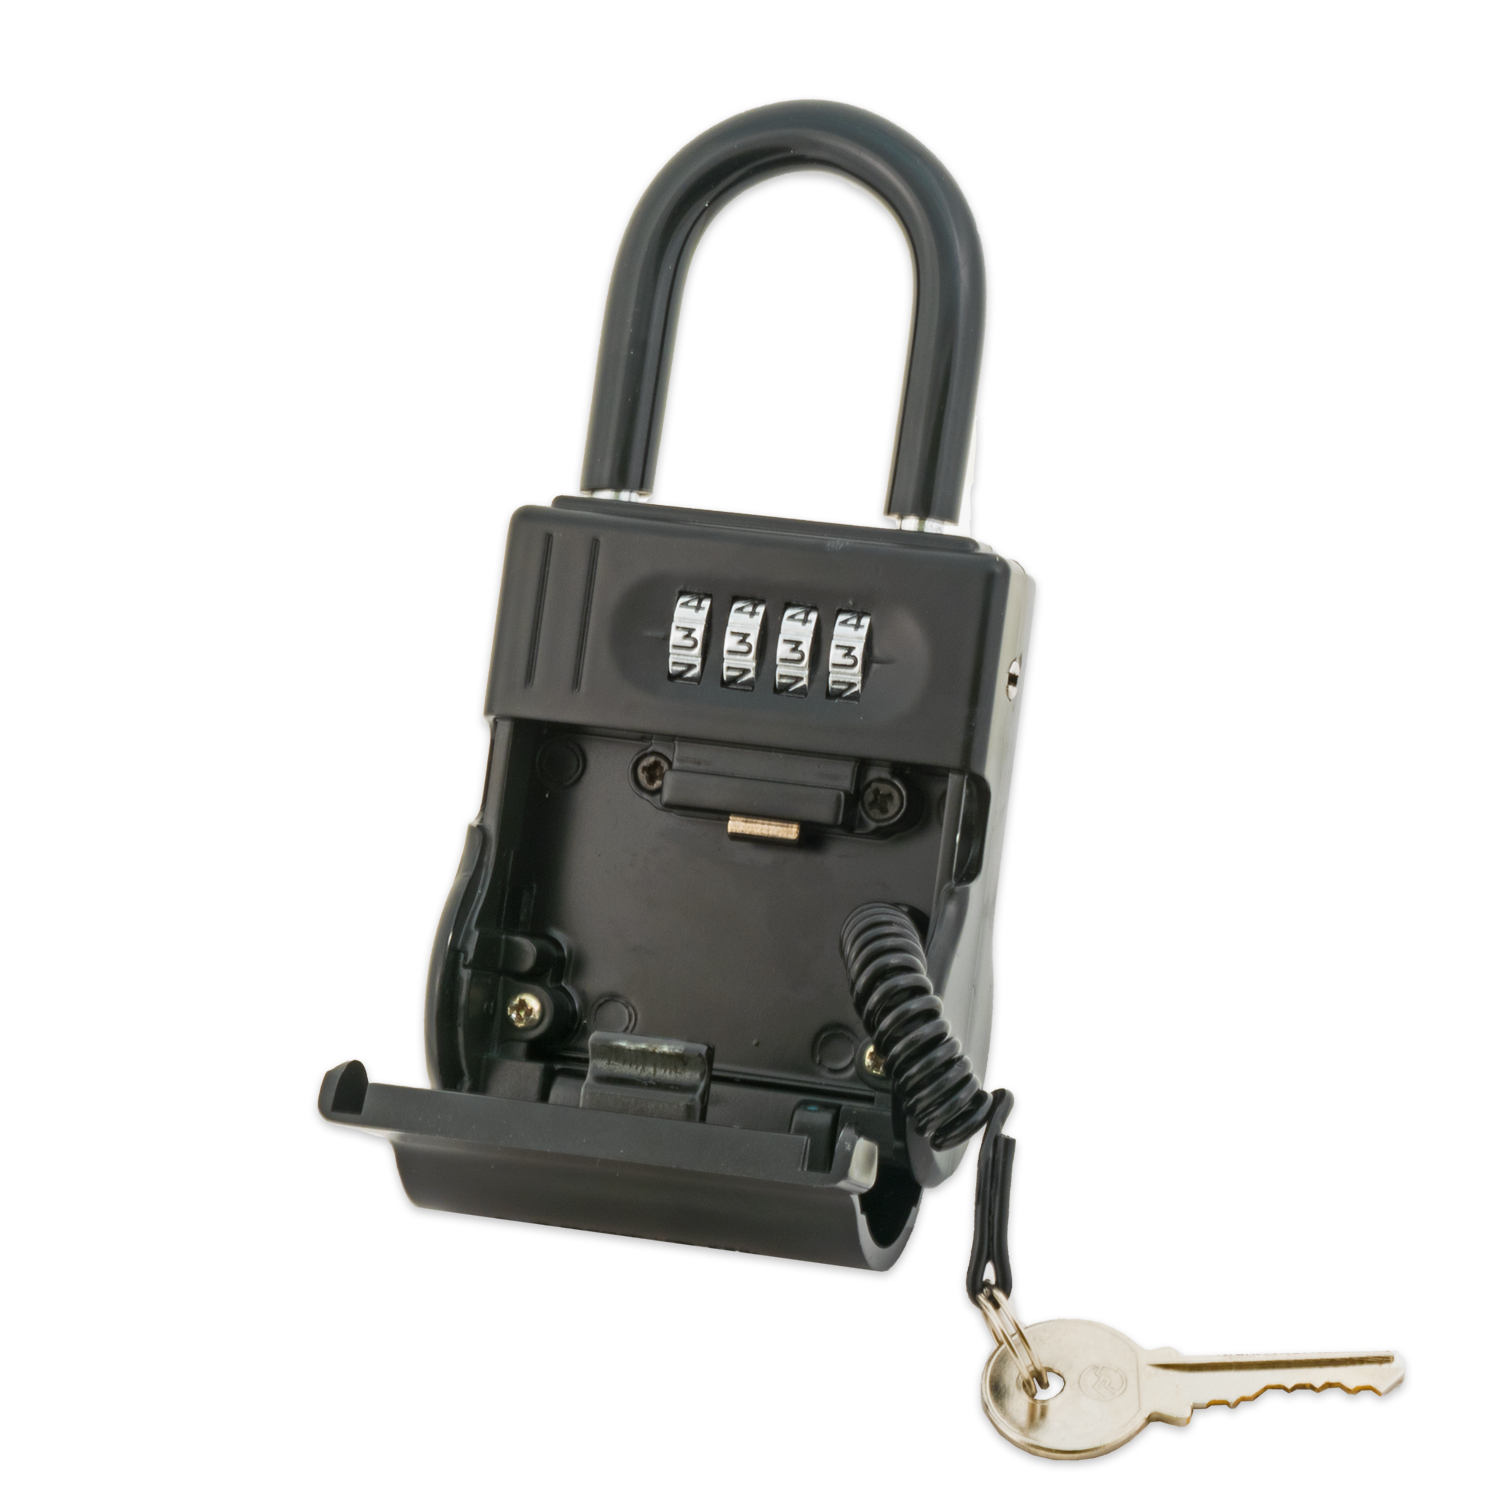 12 NEW Shurlok SL600 Lock Boxes Real Estate Key Storage Lock Realtor Lockbox 